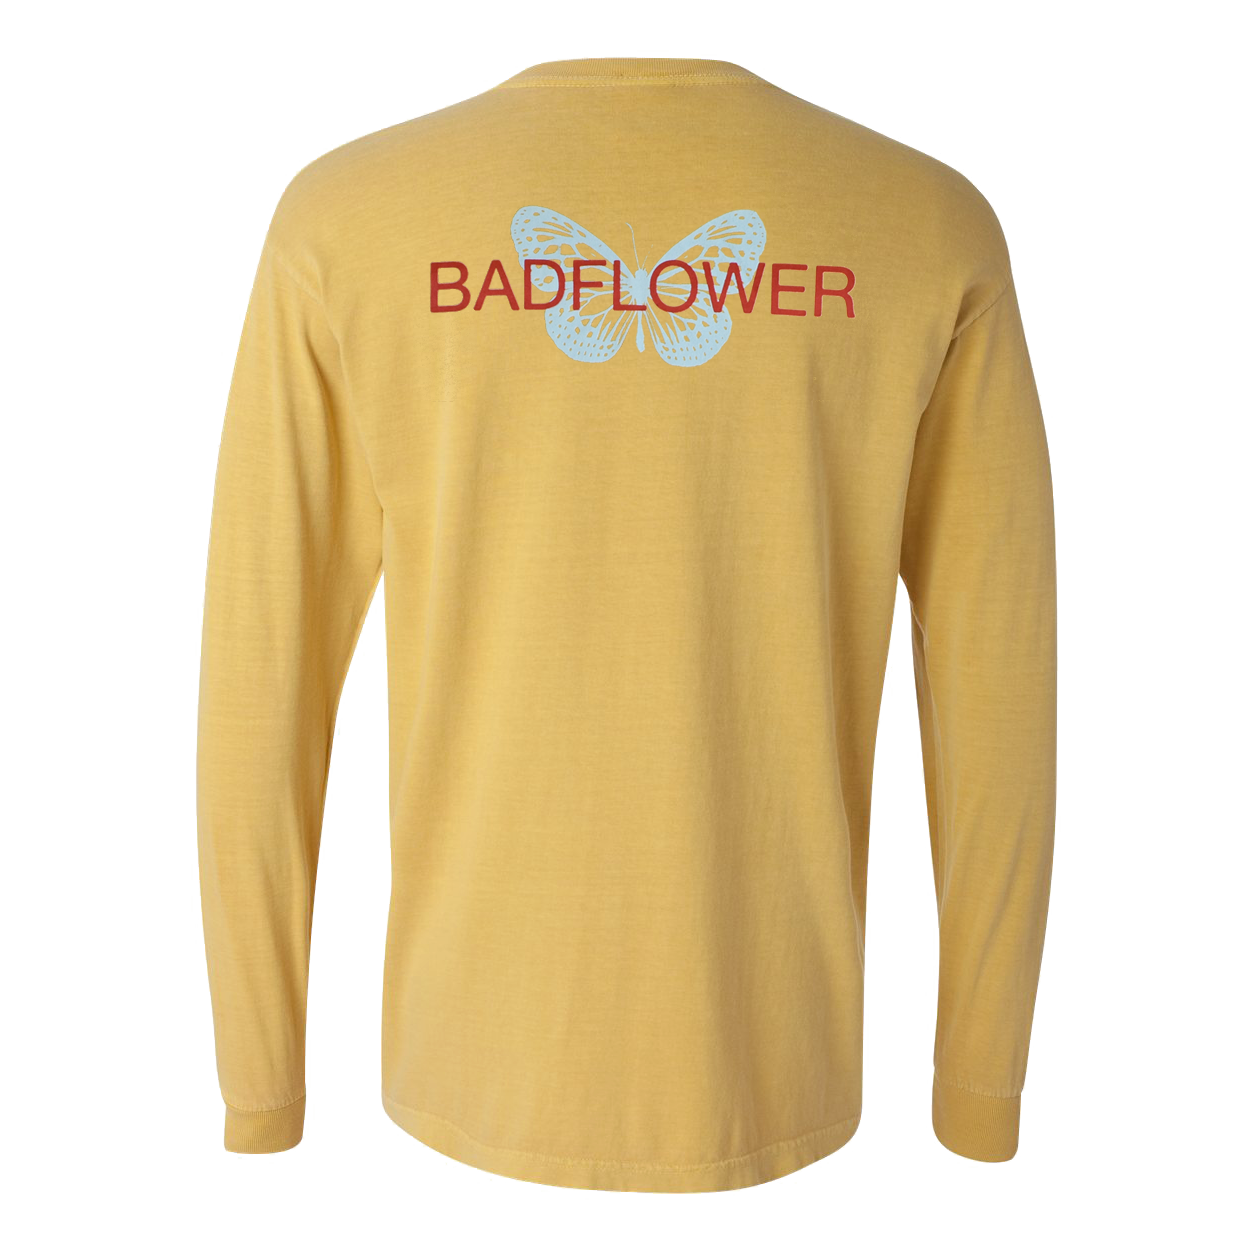 Badflower Never Said Long Sleeve (Mustard) back